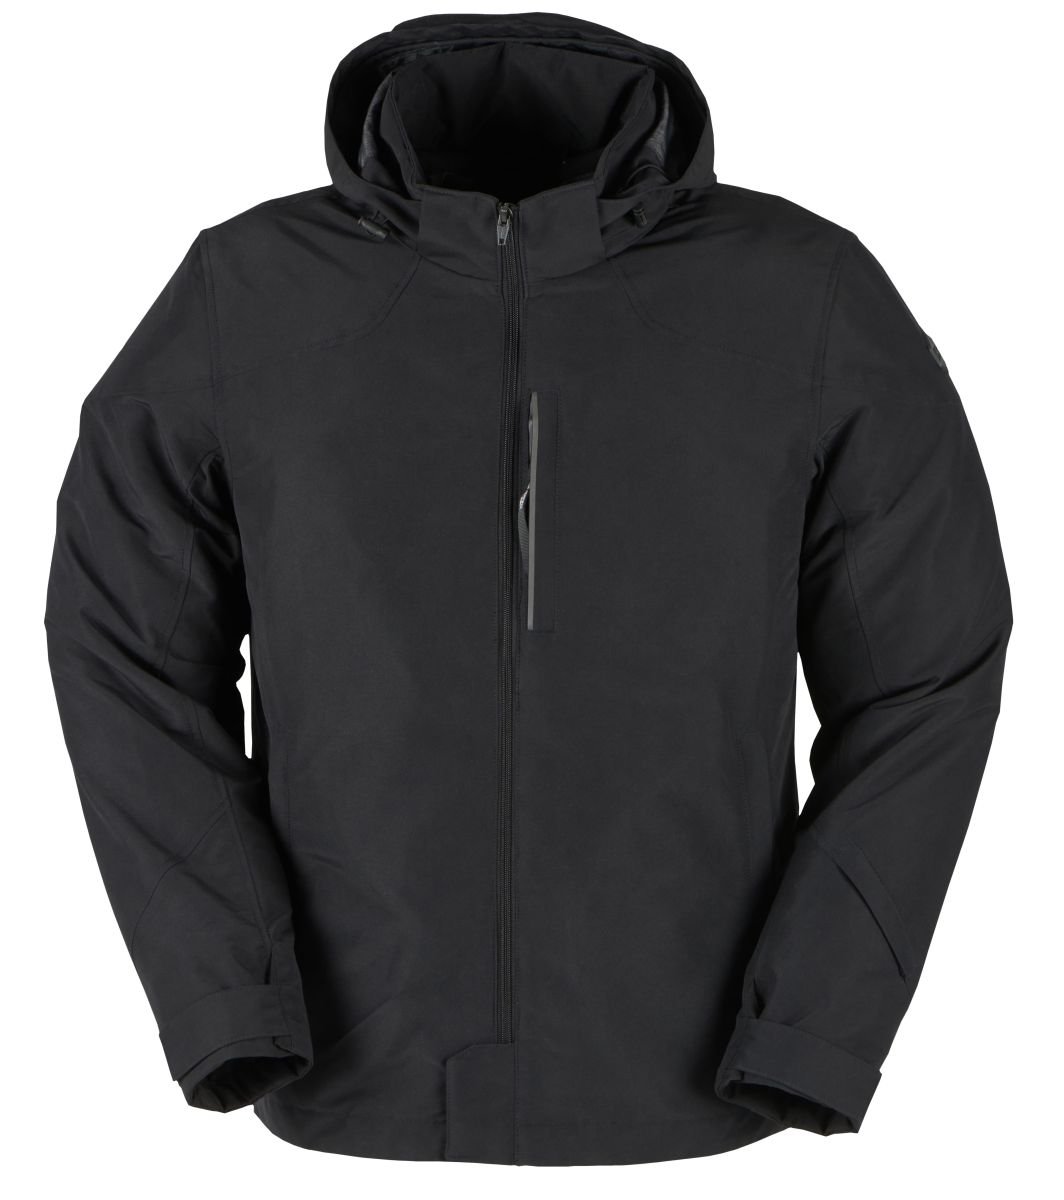 Image of Furygan London Evo 2 Jacket Black Size S EN